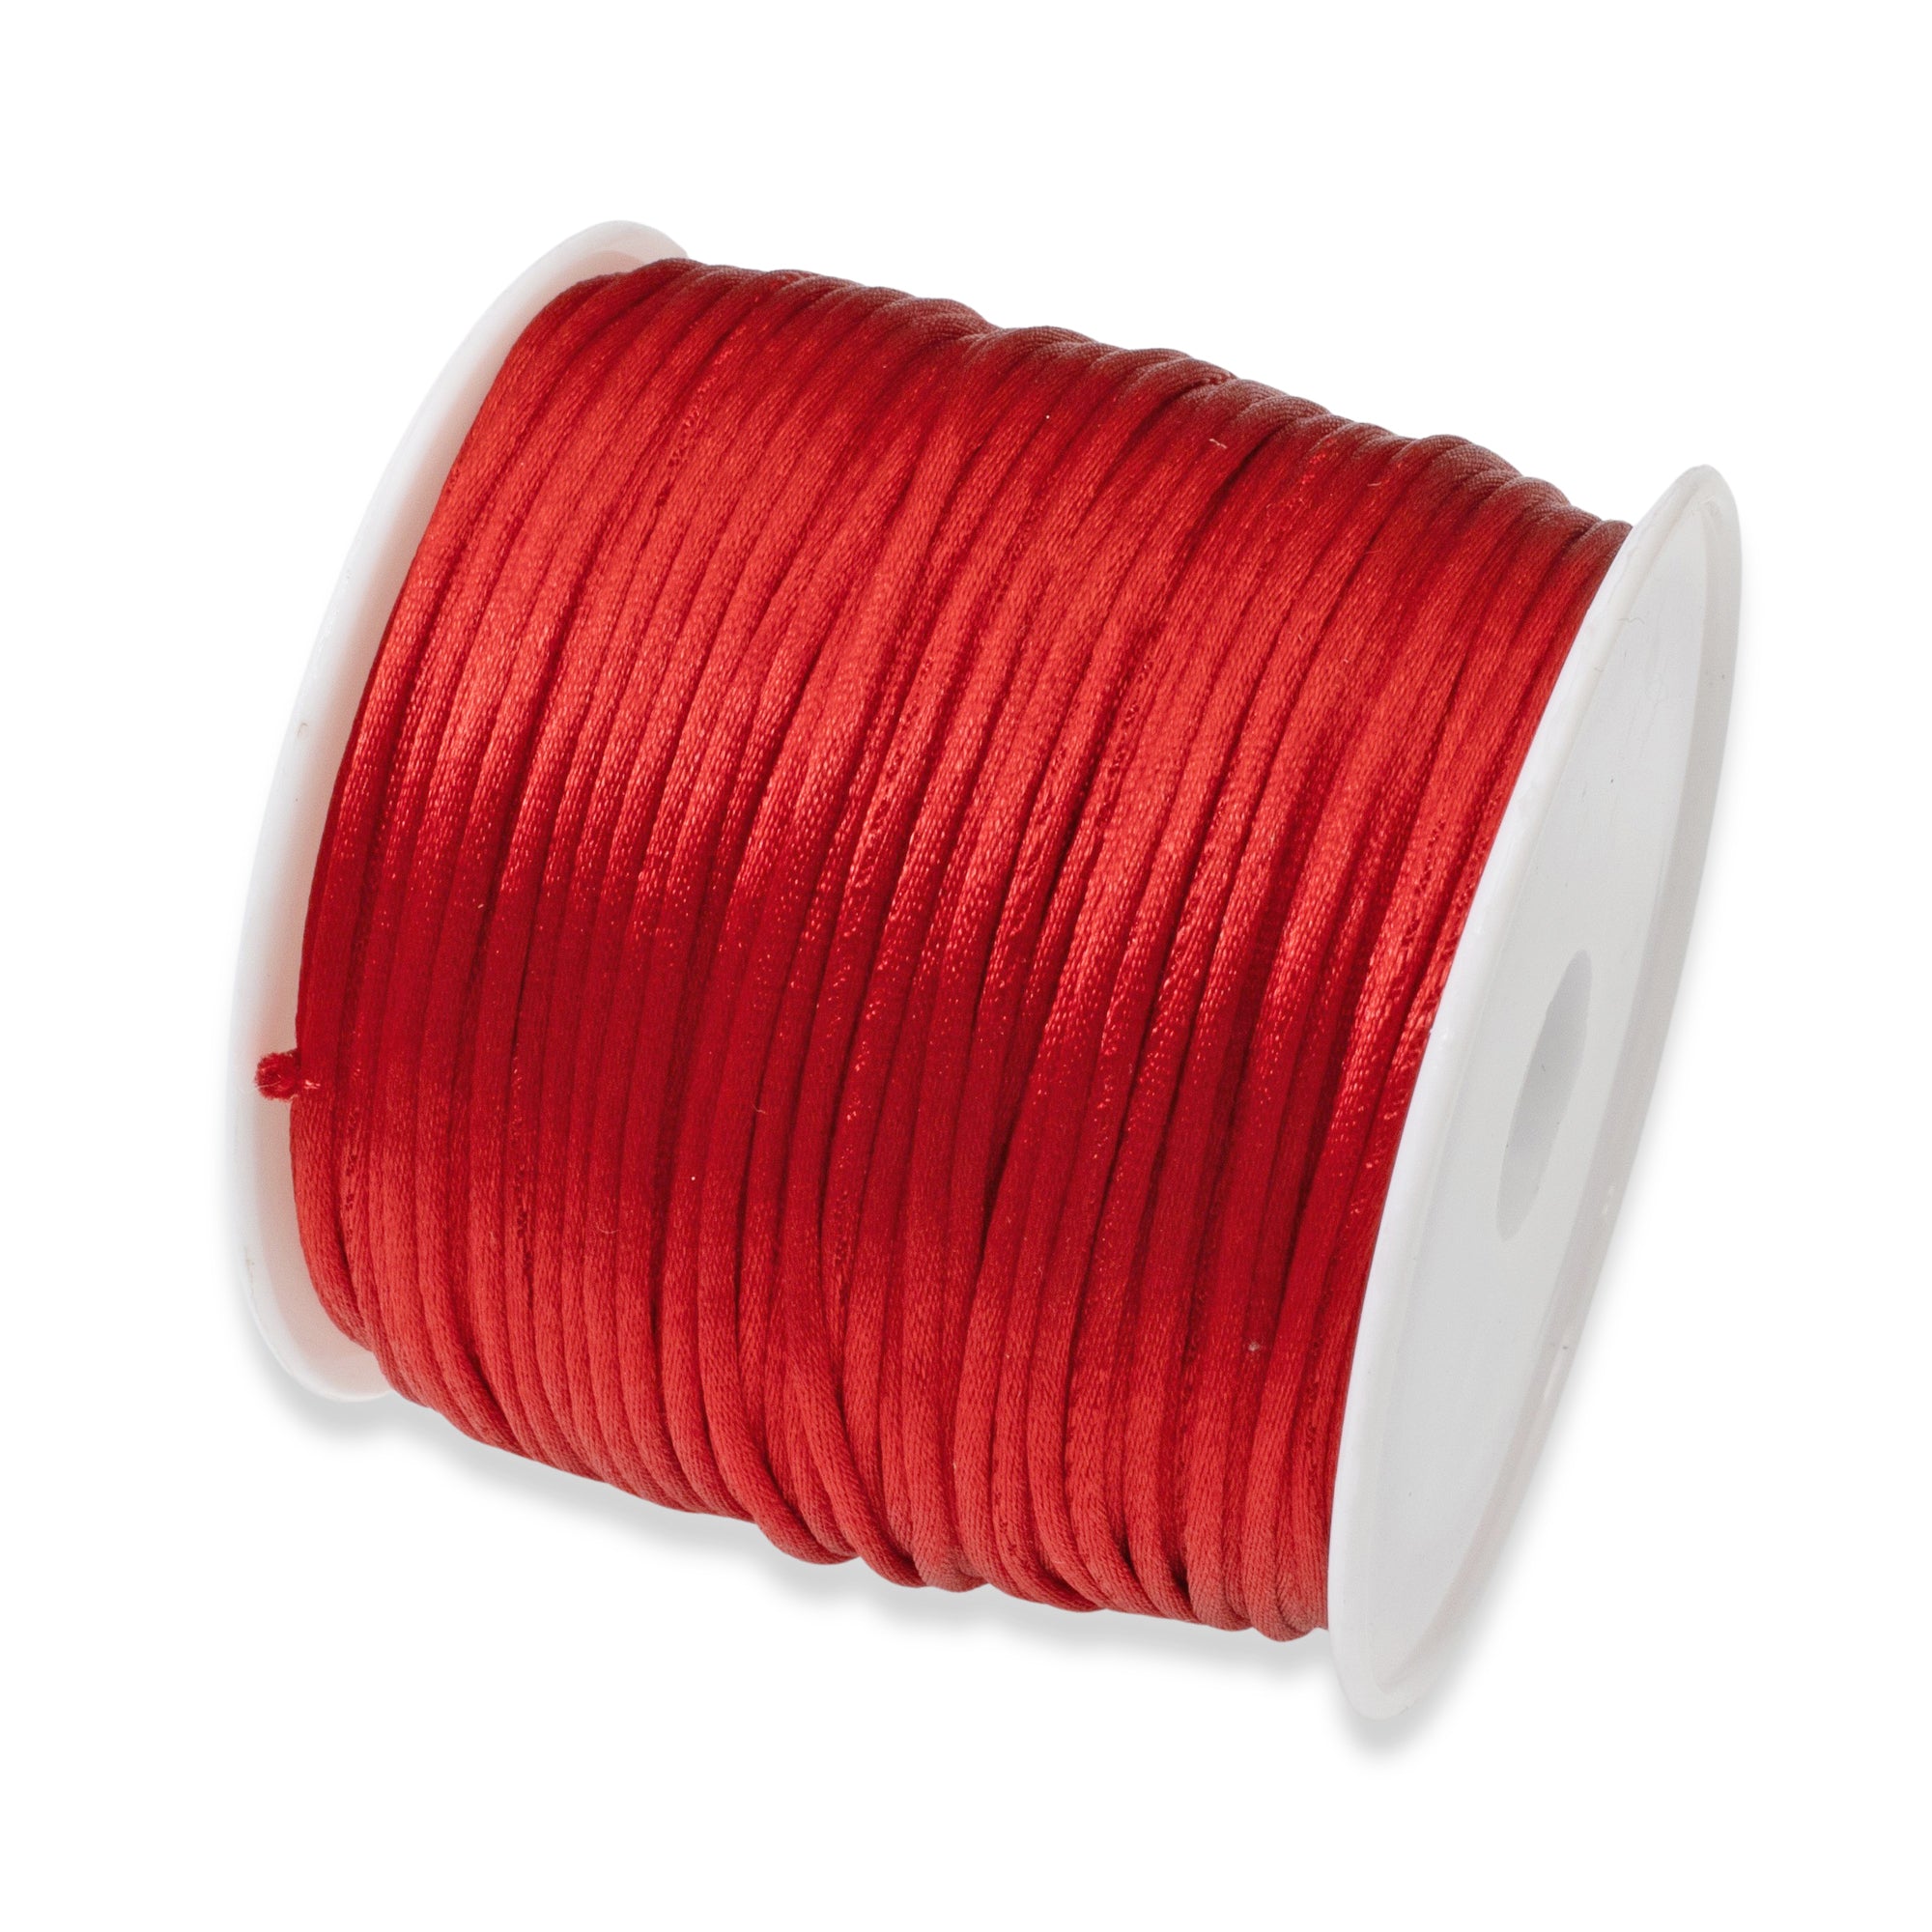 1mm Red Satin Nylon Cord - Christmas Jewelry Cord